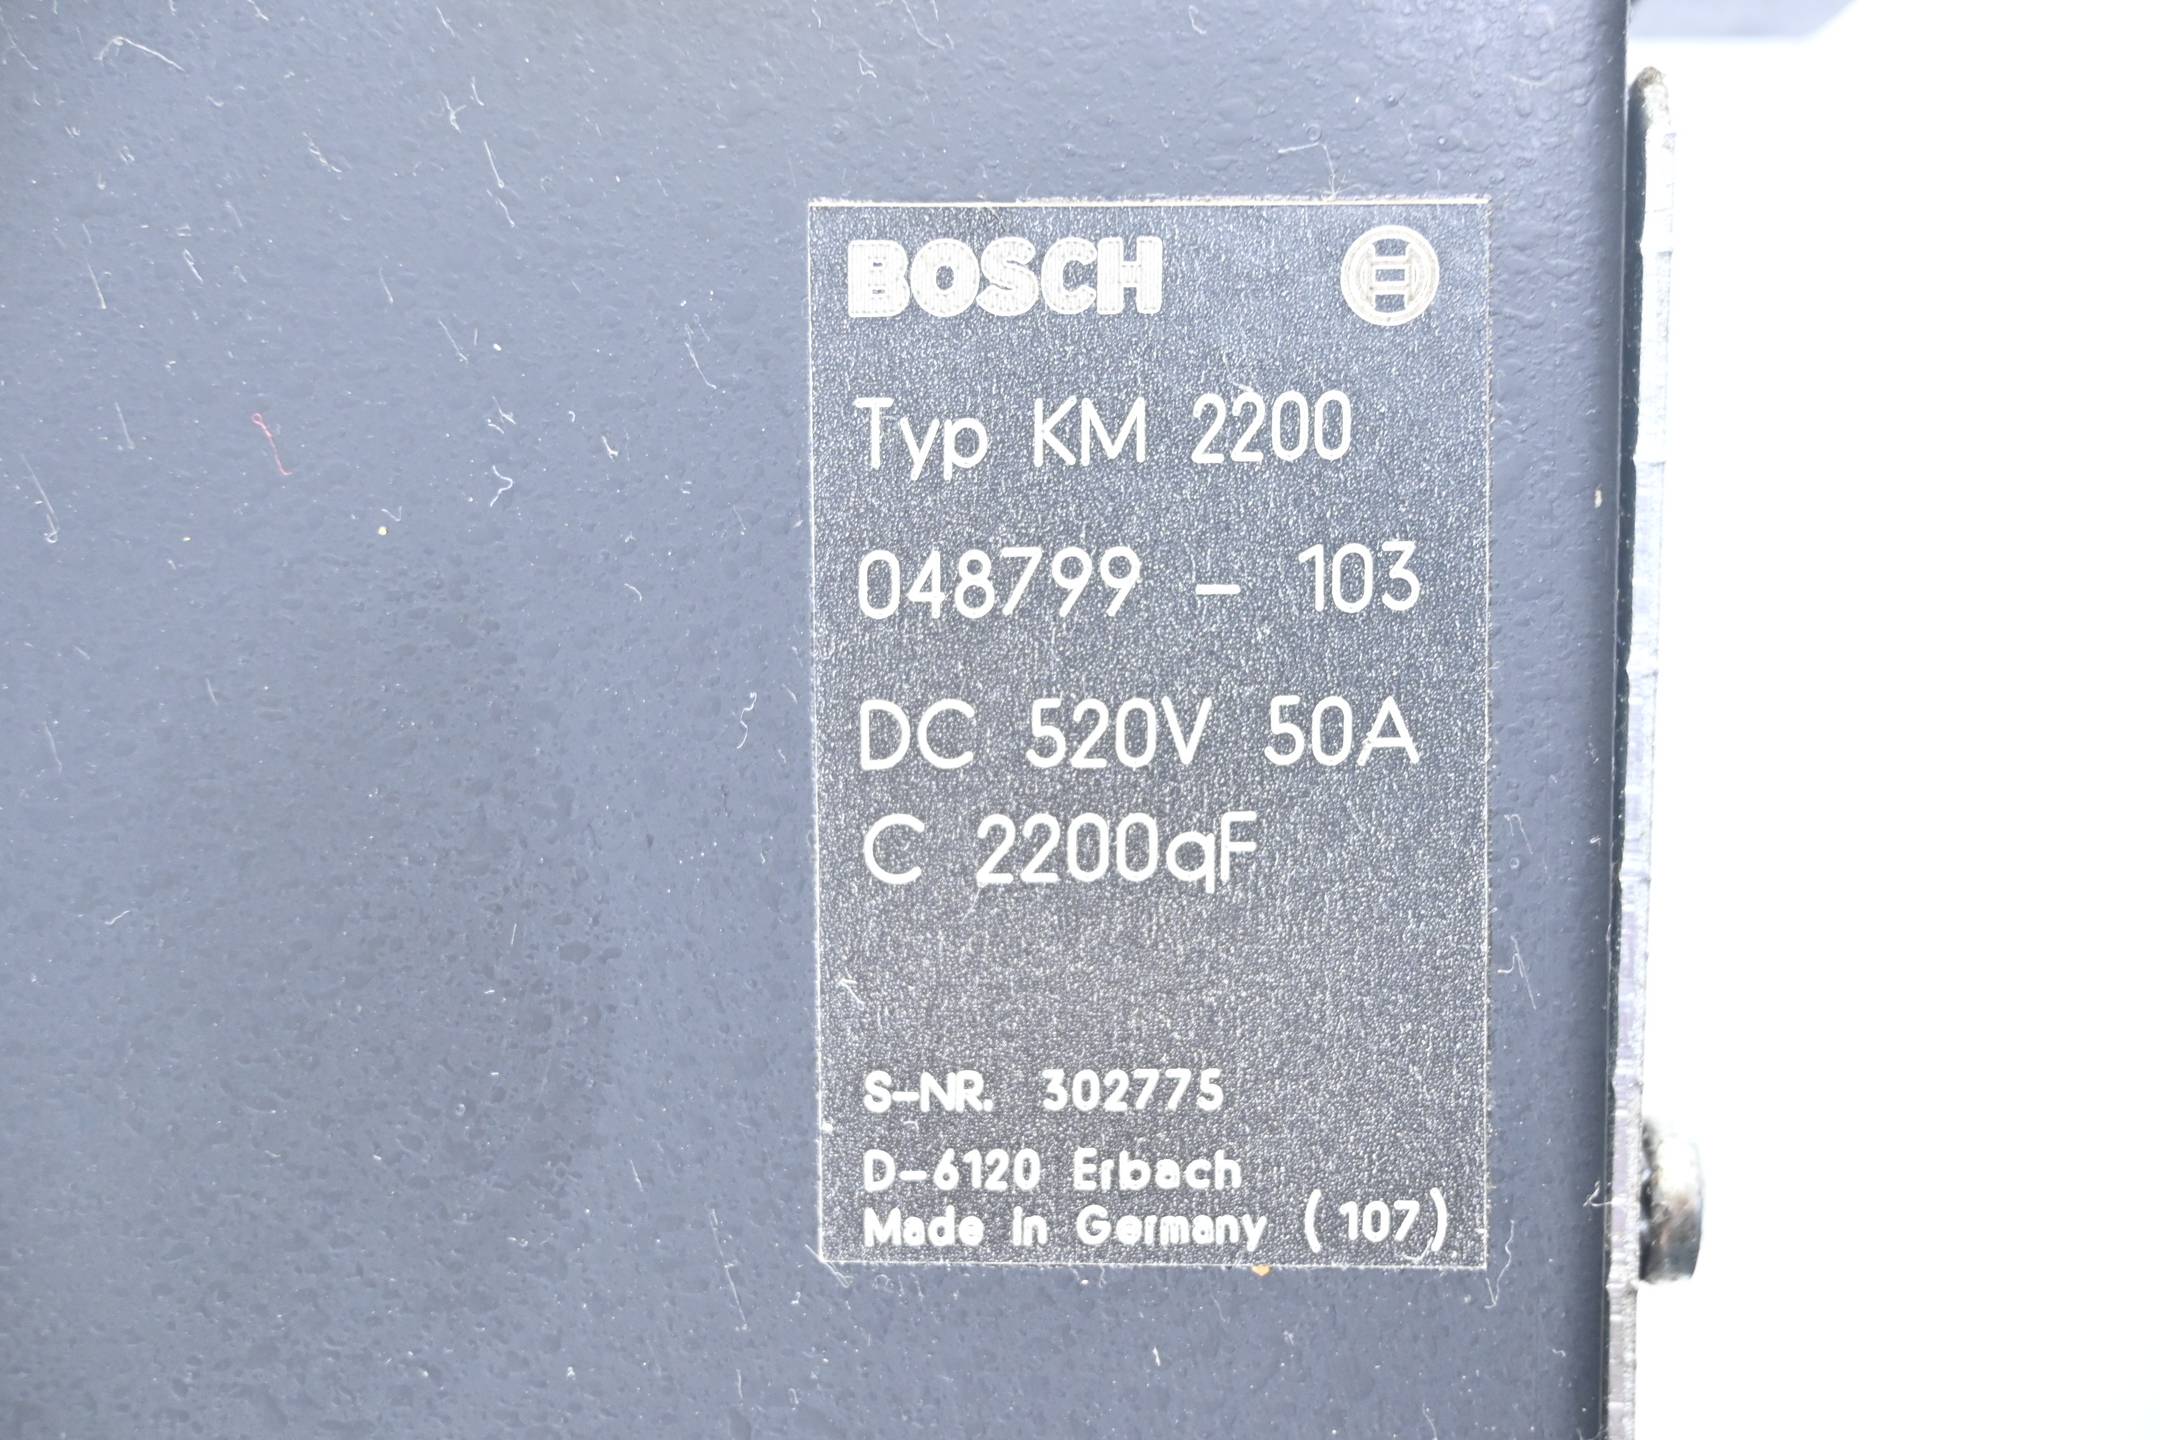 Bosch Kondensatormodul KM 2200 ( 048799-103 )